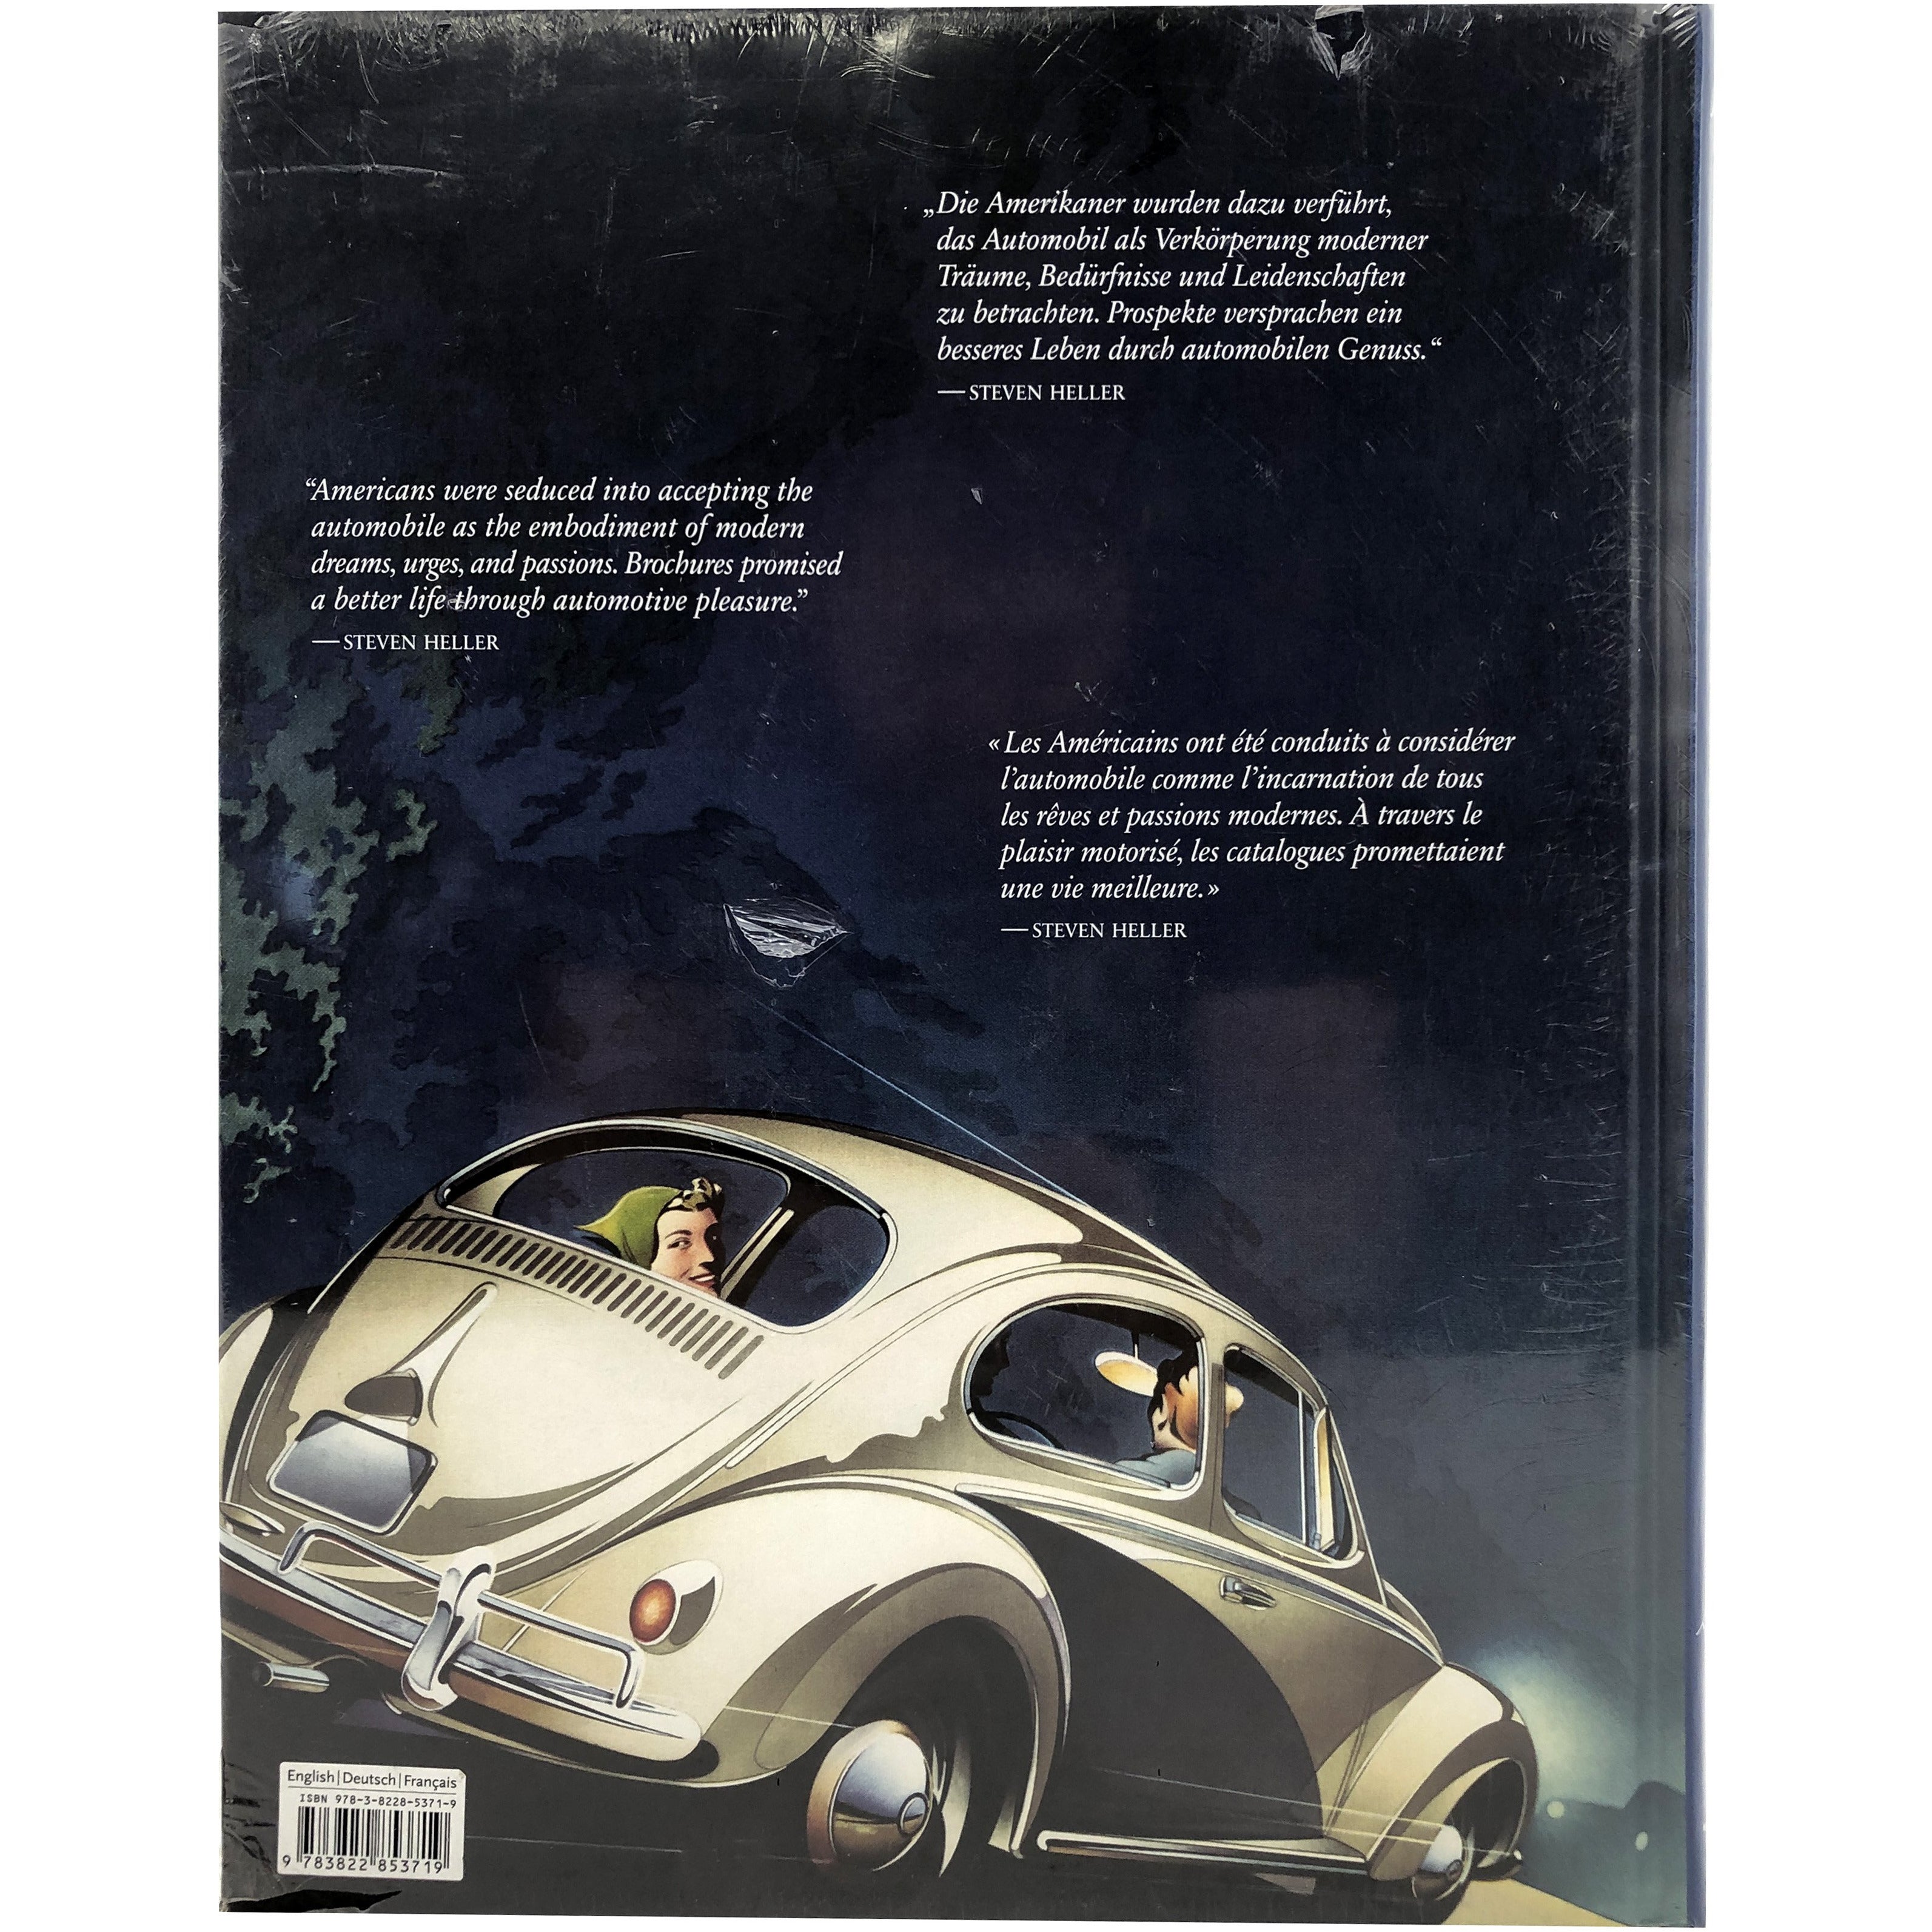 Automobile Design Graphics Hardcover